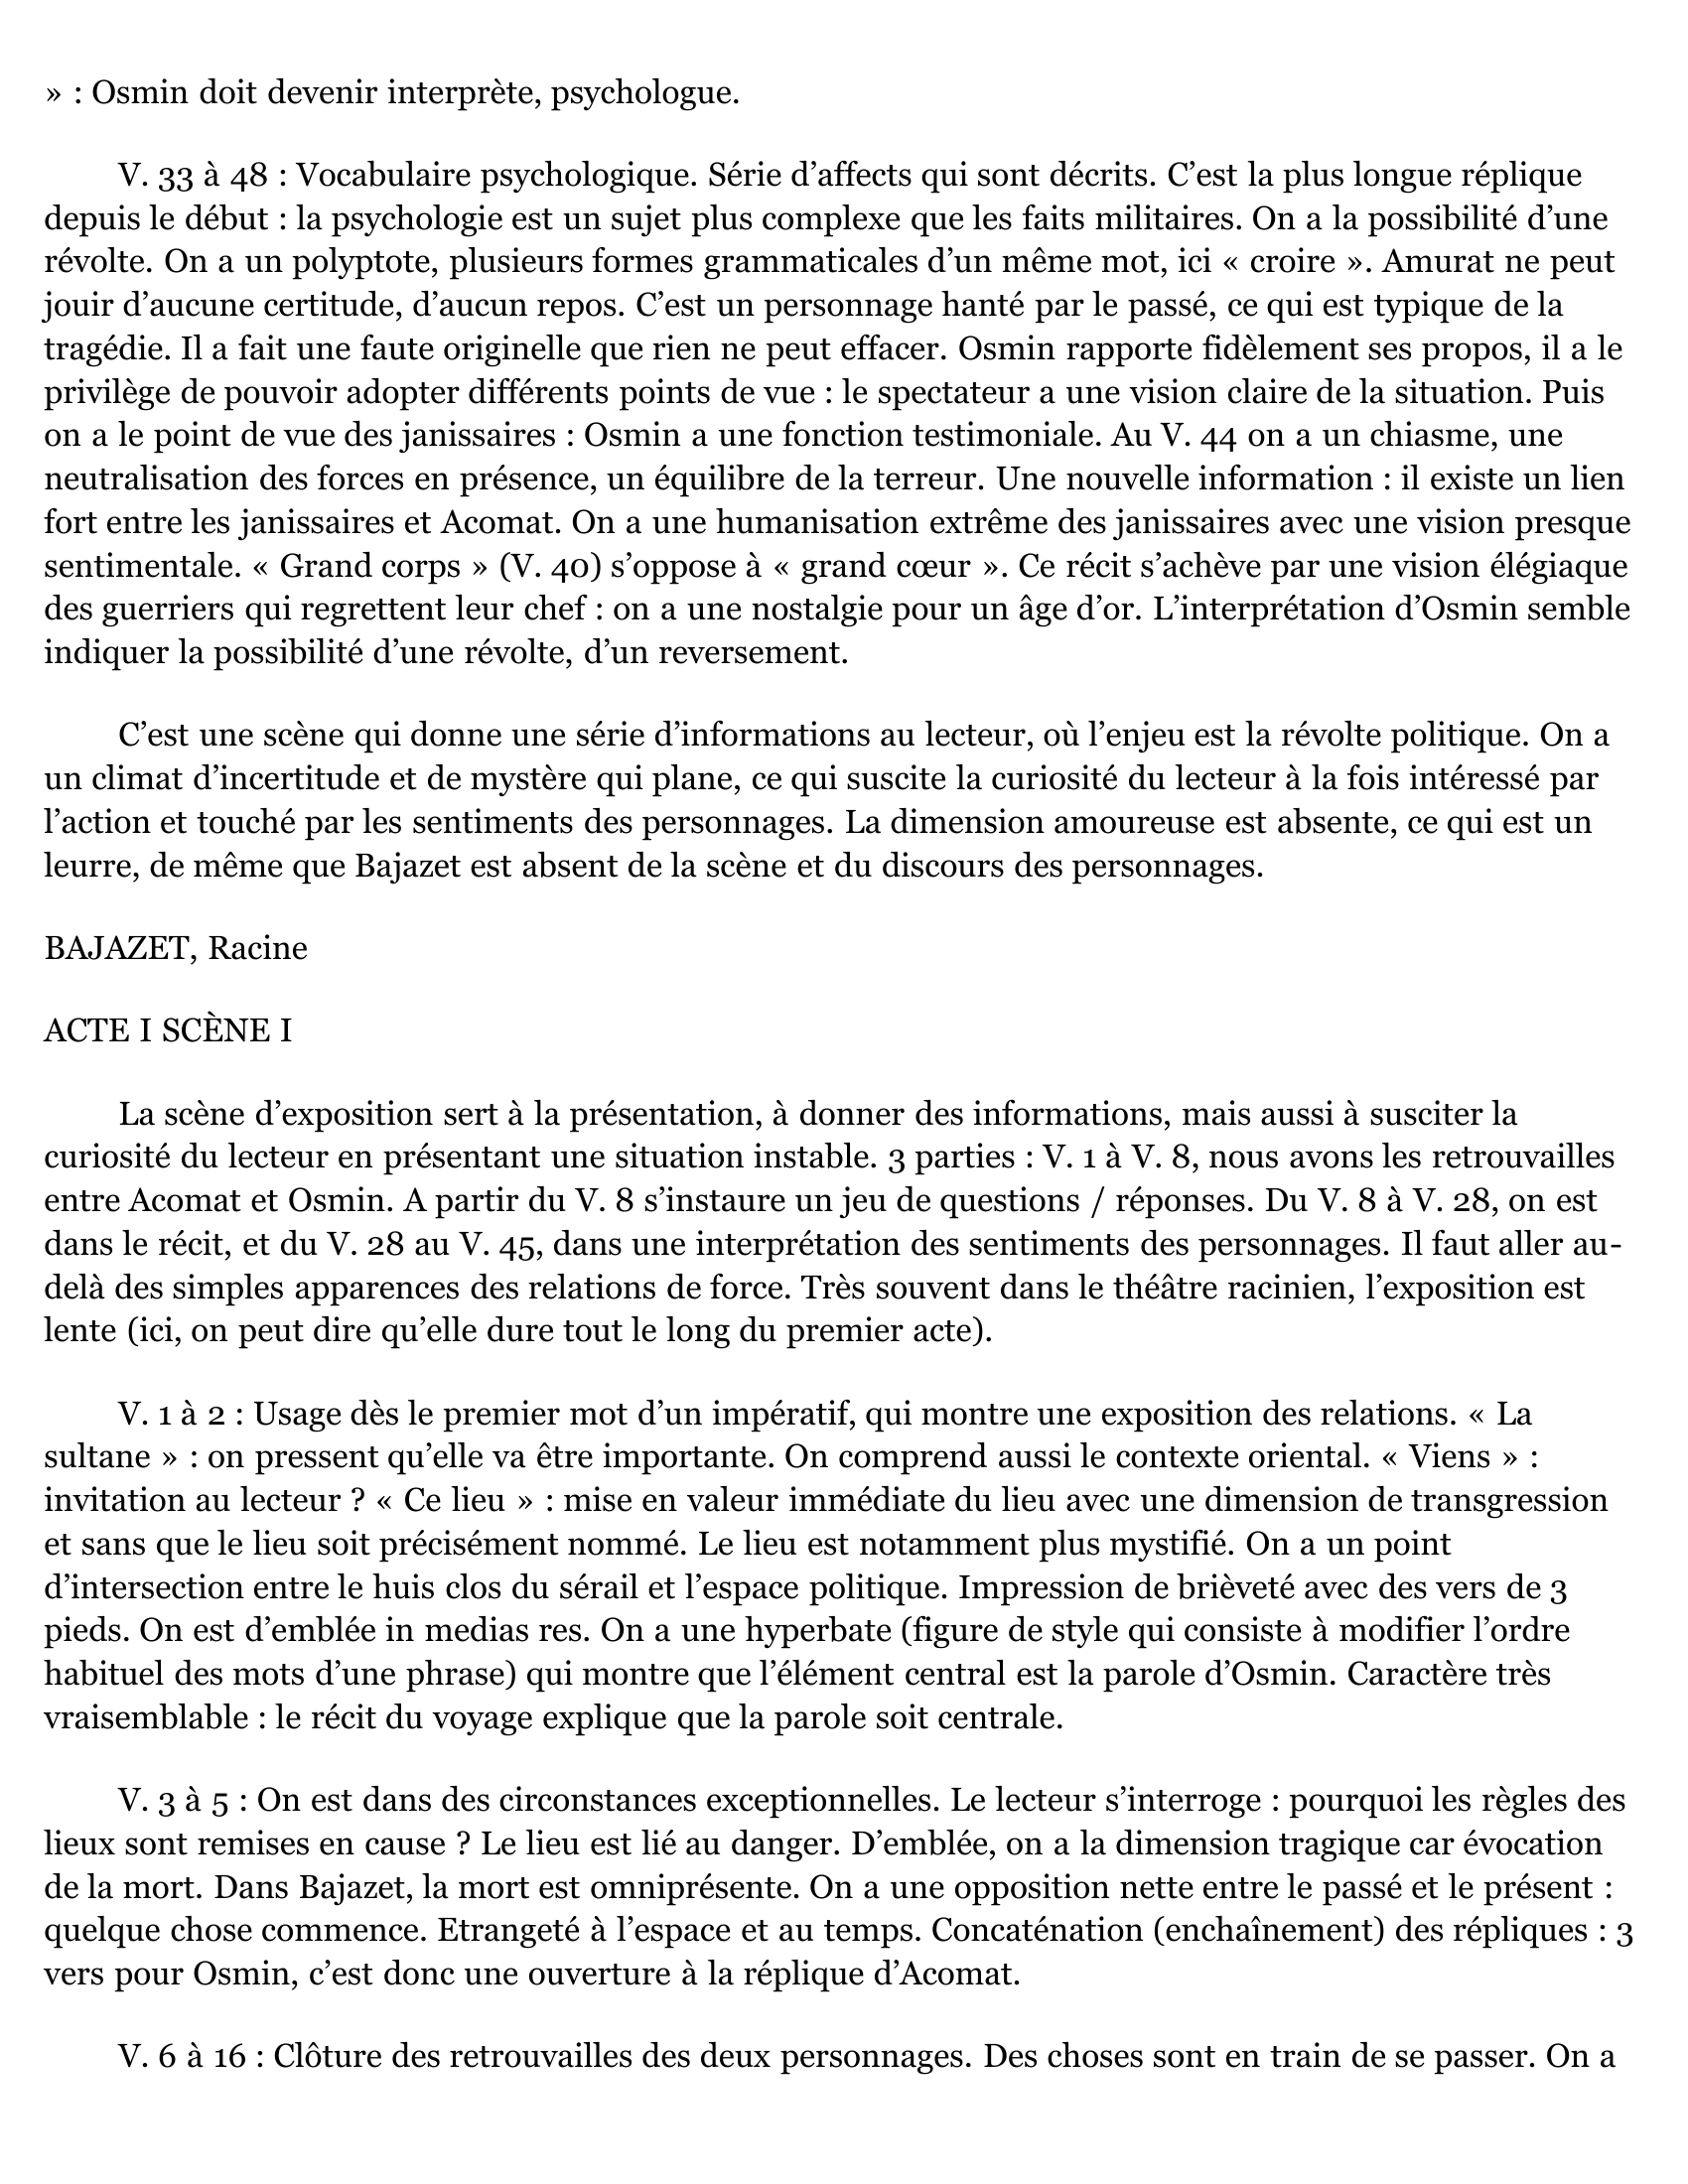 Prévisualisation du document Acte I Scène I Bajazet de Racine.